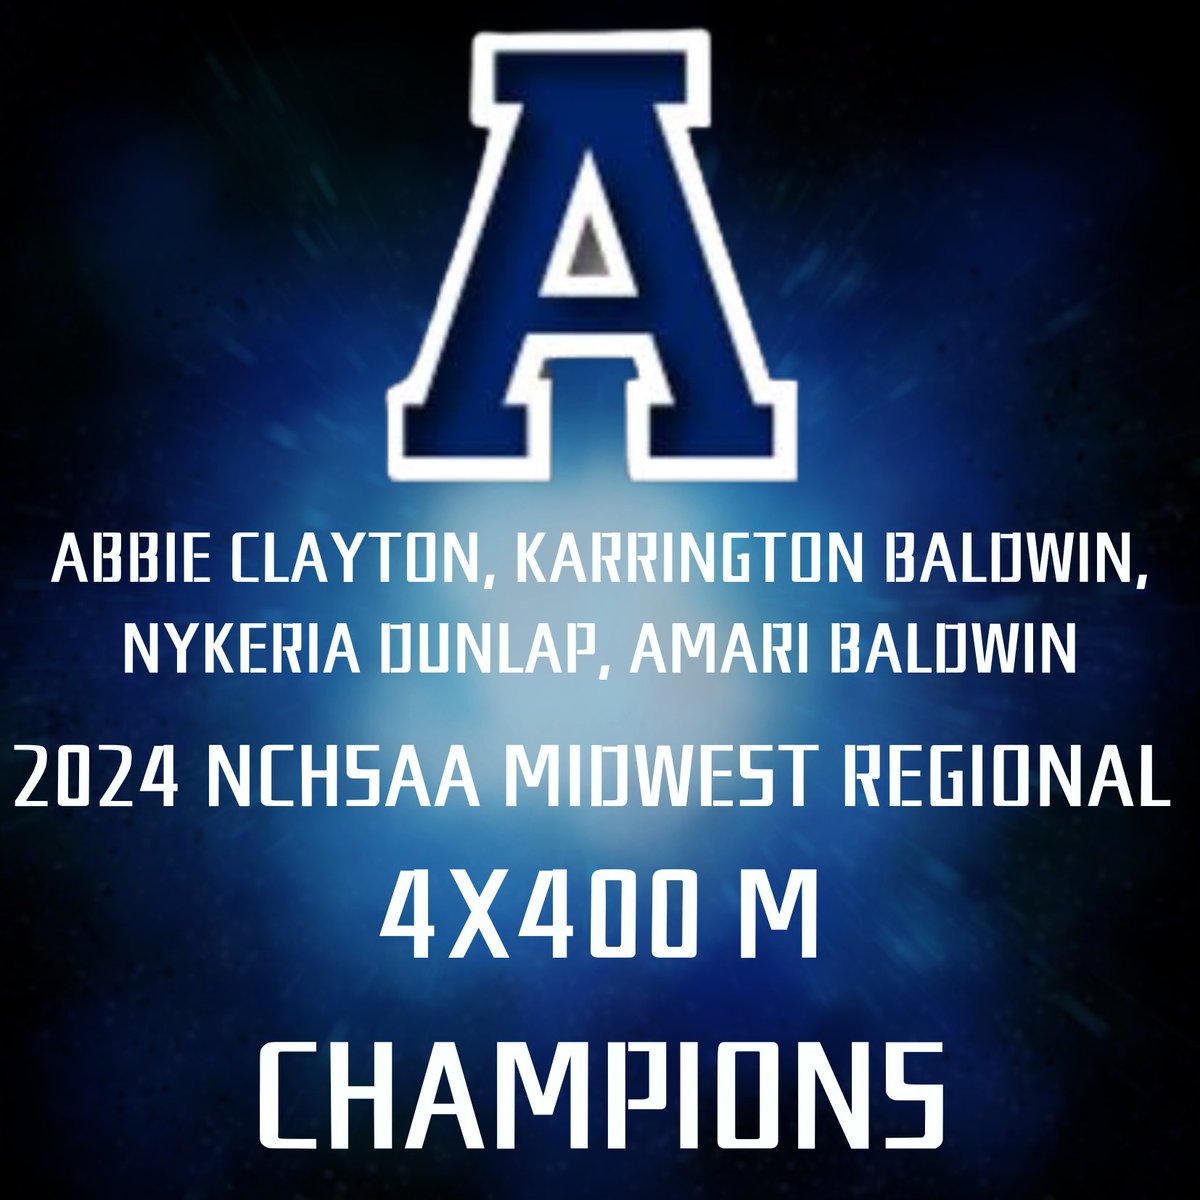 🚨ATOWN TRACK🚨

Midwest Regional Champions:

Amari Baldwin - Triple Jump

Dre Davis - 100M Dash

Girls 4x400M Relay - Abbie Clayton, Karrington Baldwin, NyKeria Dunlap, Amari Baldwin

#BulldogPride